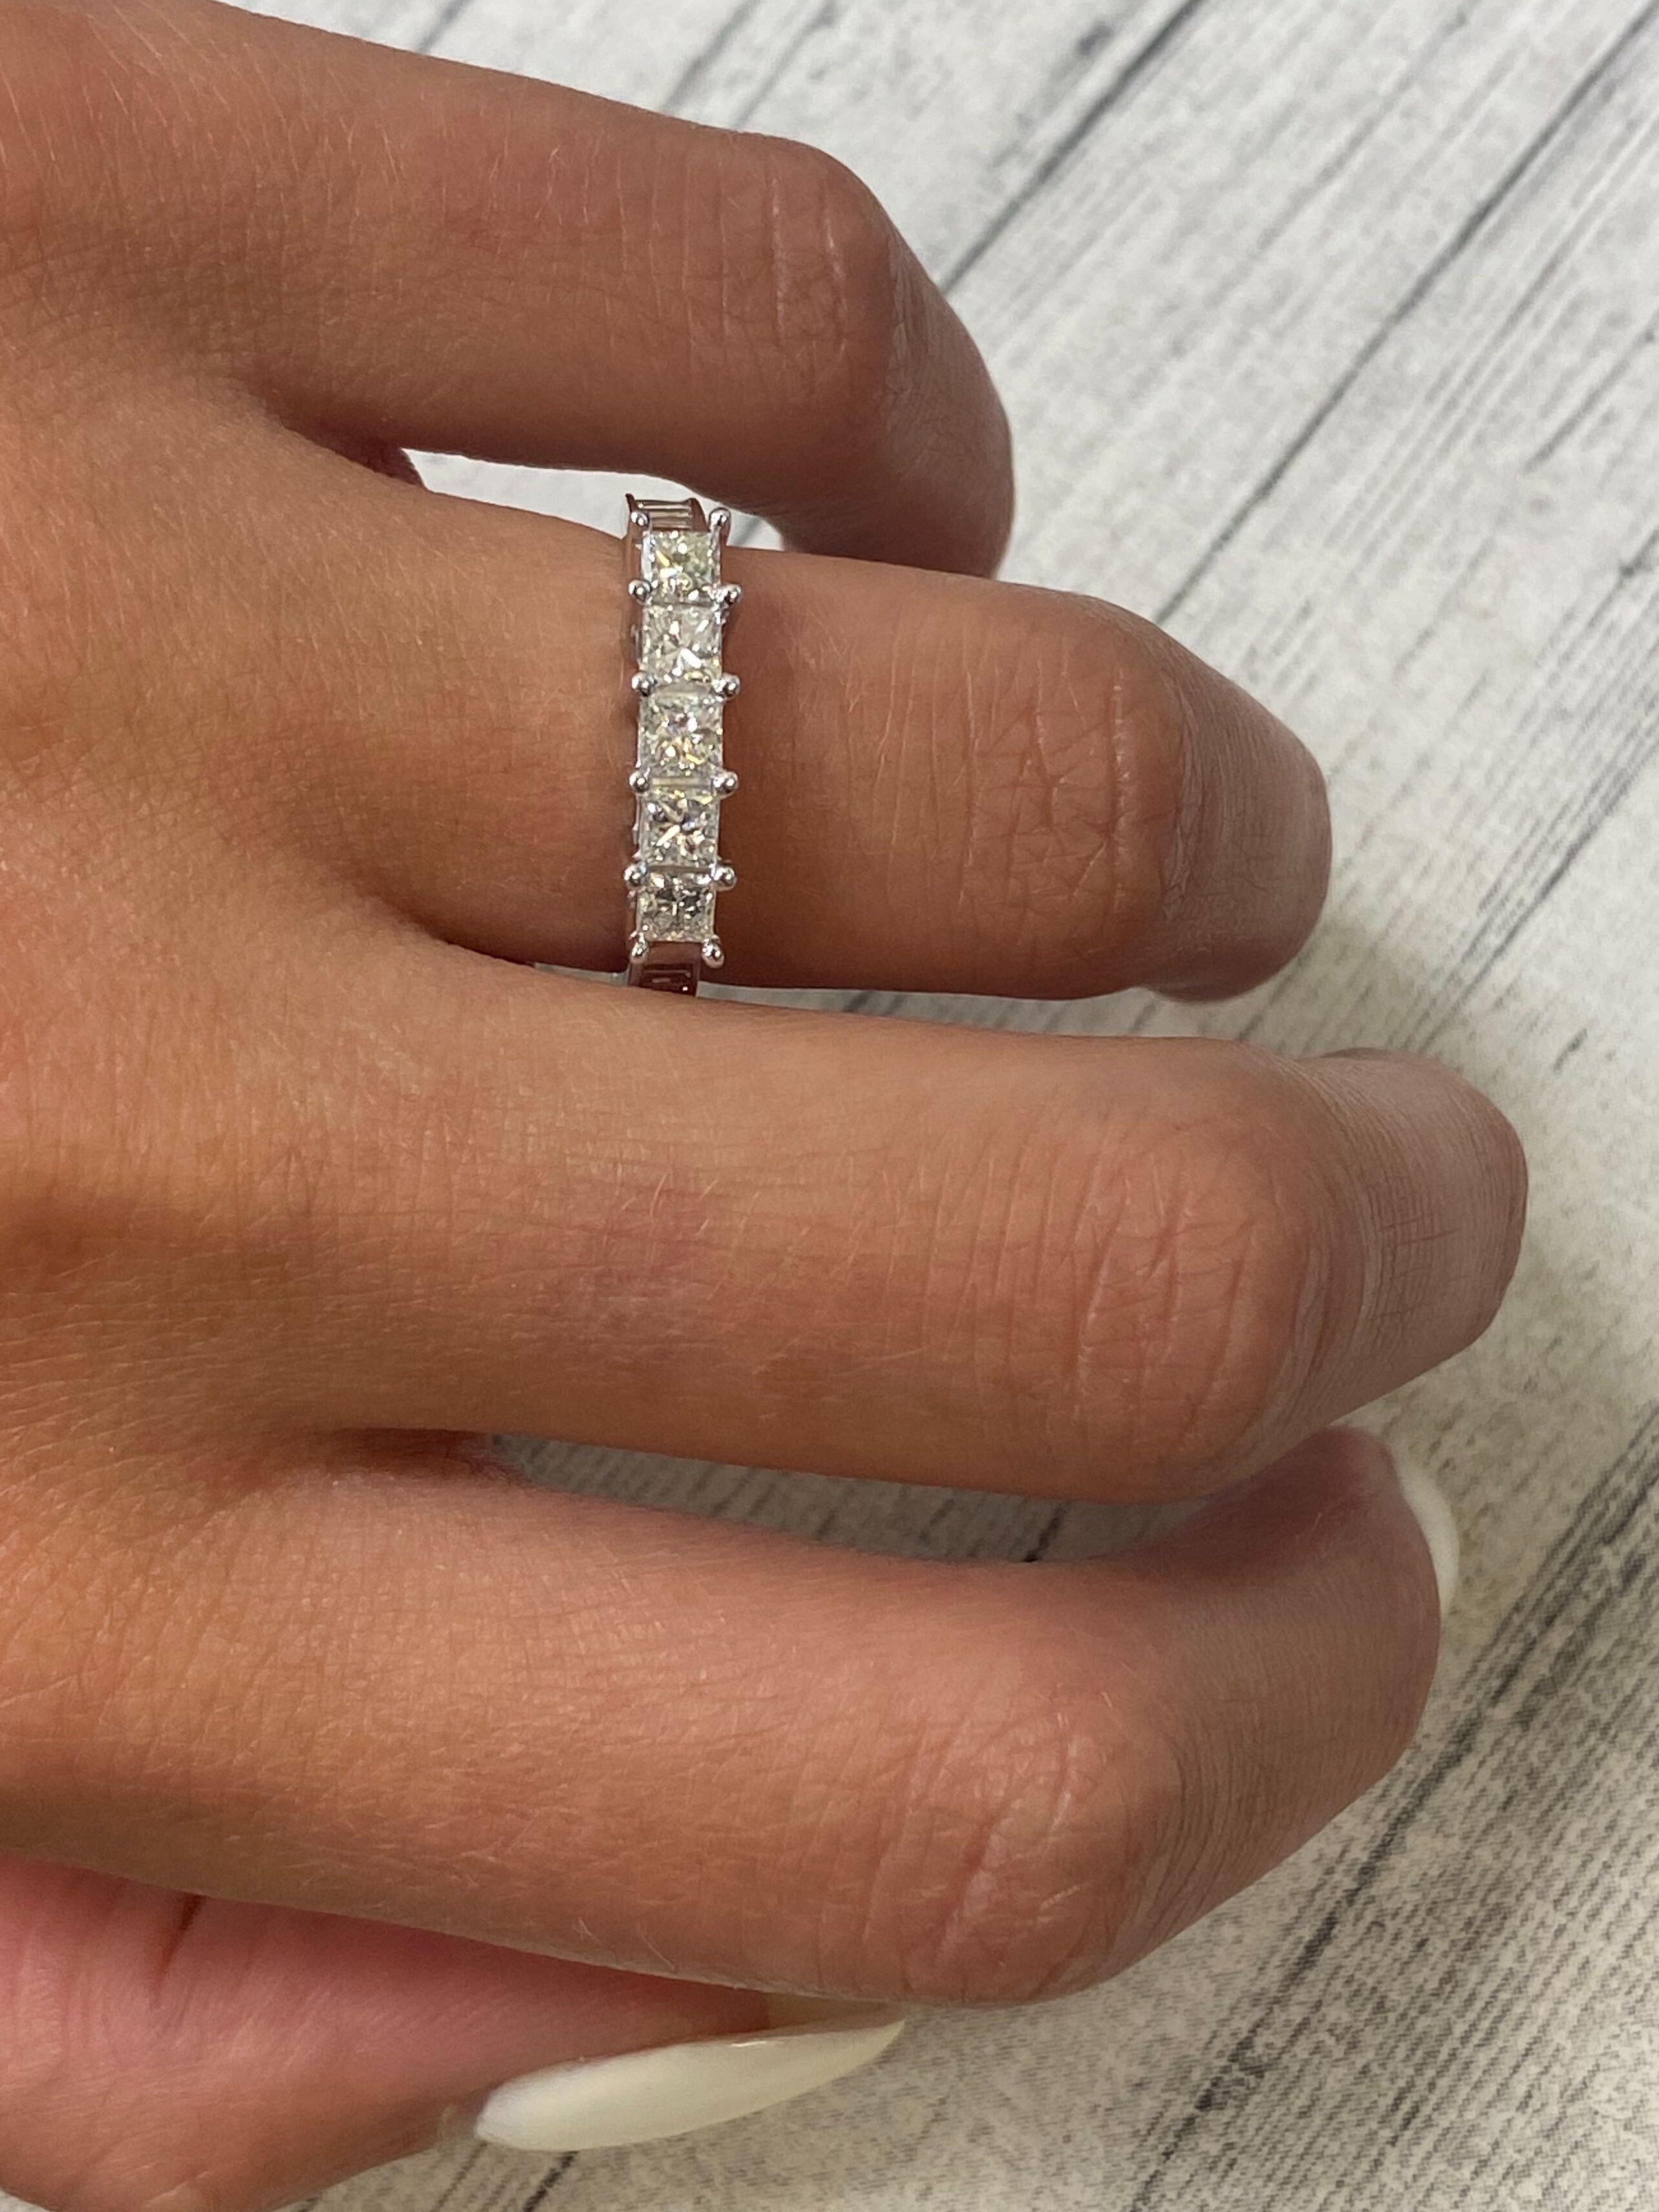 Rachel Koen Princess Cut Diamond Wedding Band Ring 14K White Gold 1.15 Cttw For Sale 2